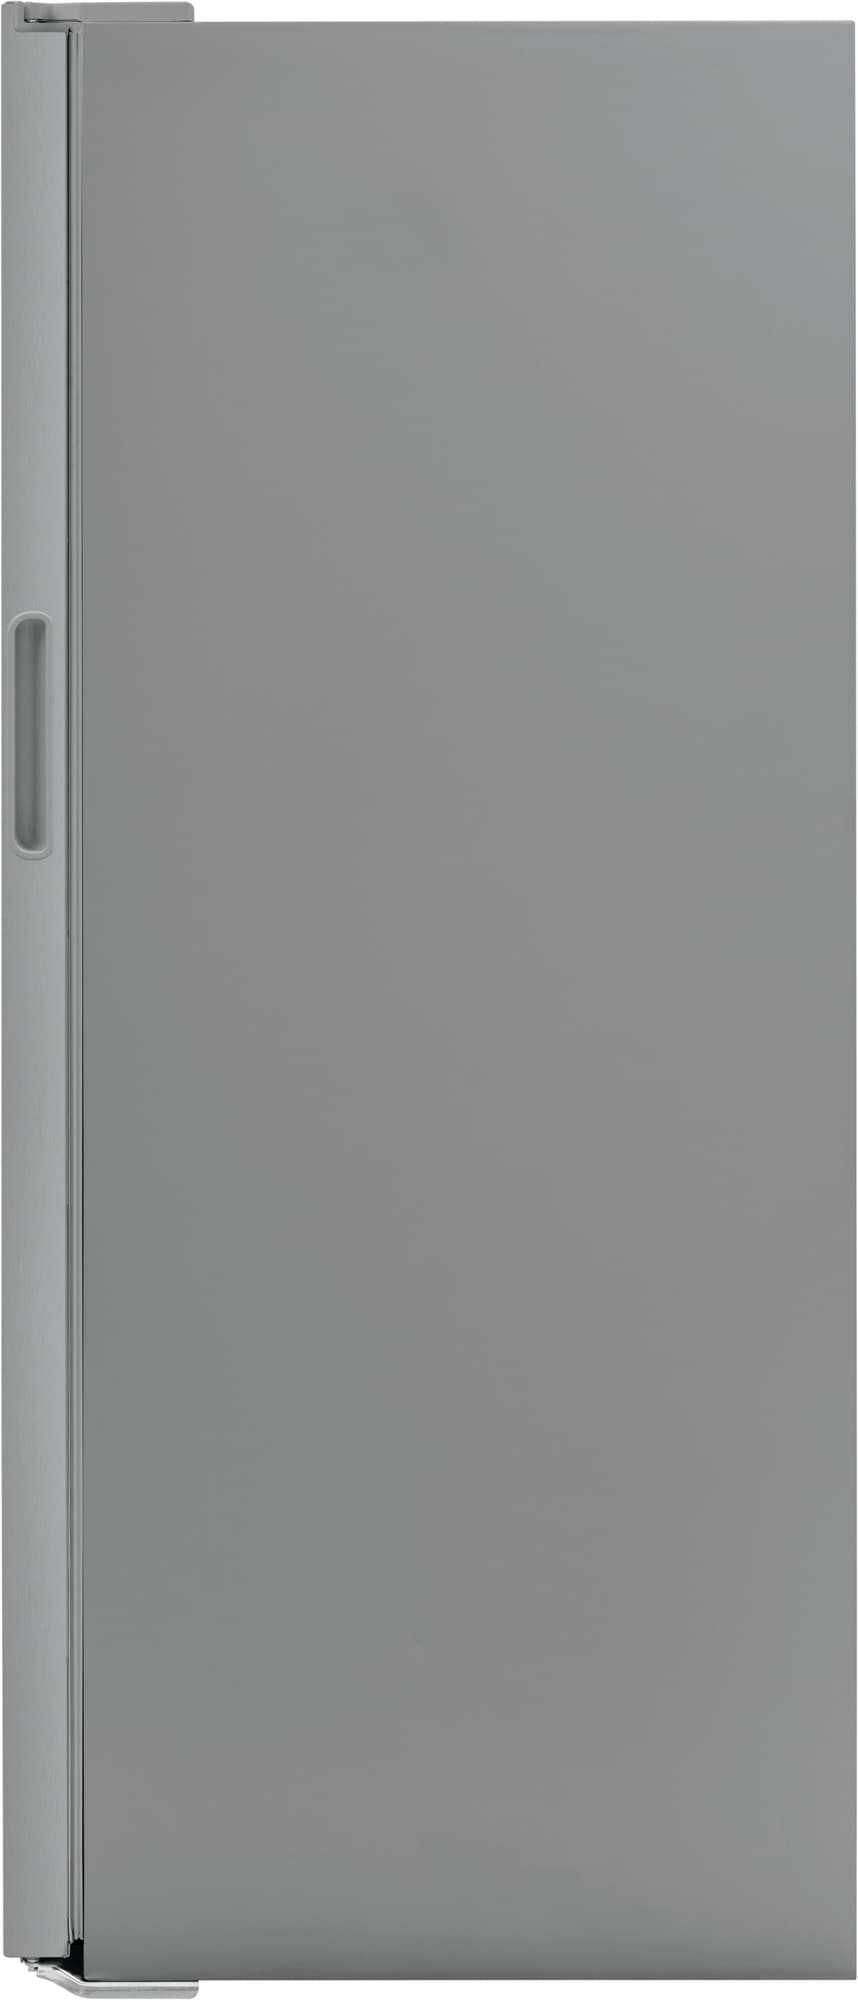 SMETA Upright Freezer Convertible Refrigerator|Freezers Garage Ready  Standup Frost-Free Fridge Deep Freezer 18 Cuft Full Size with Tempered  Glass